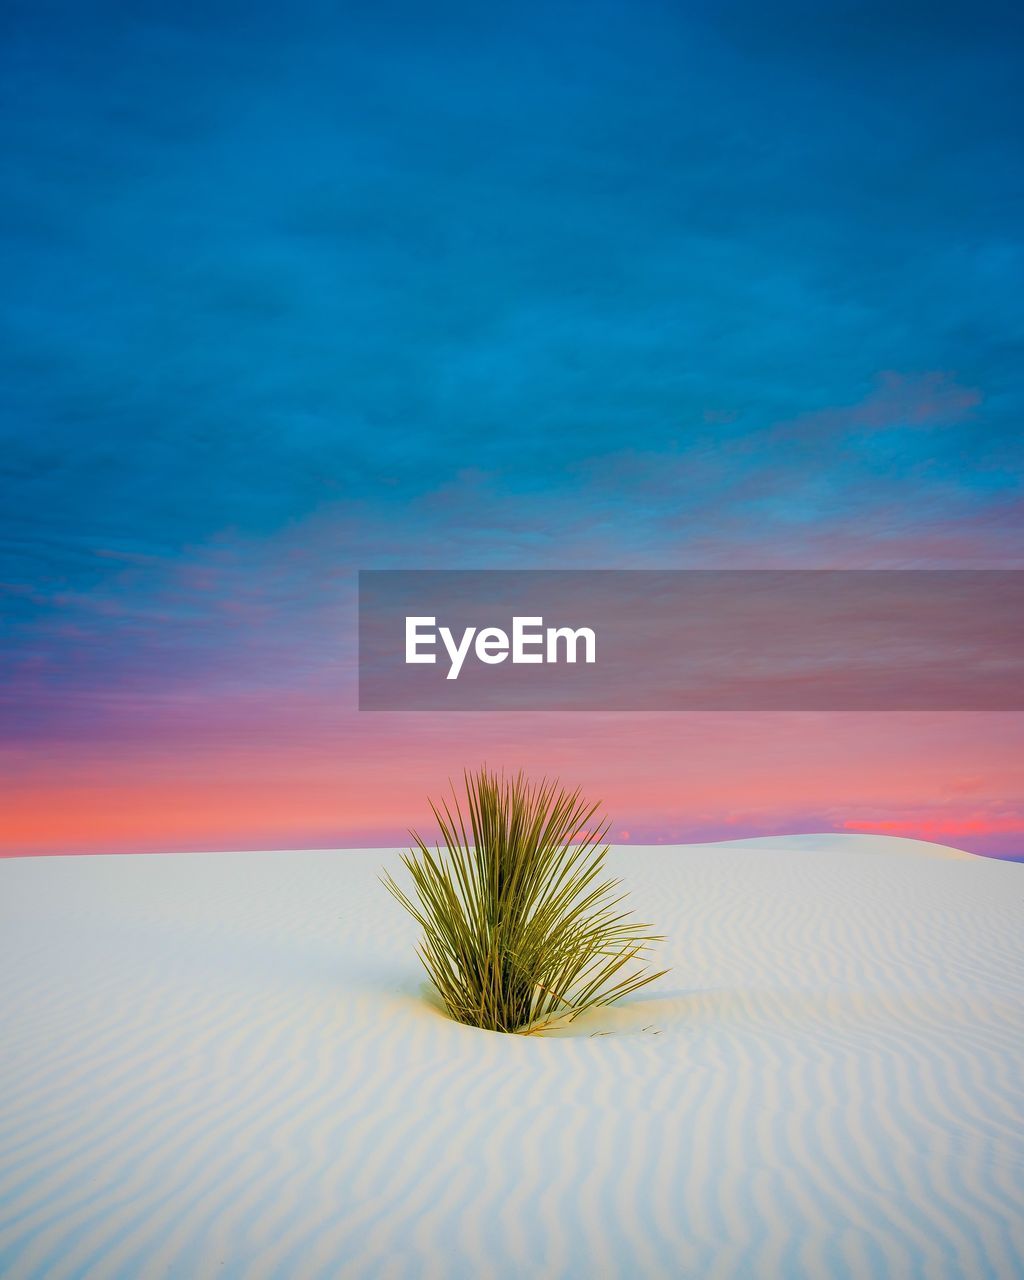 Plants on sand dune against sky during sunset